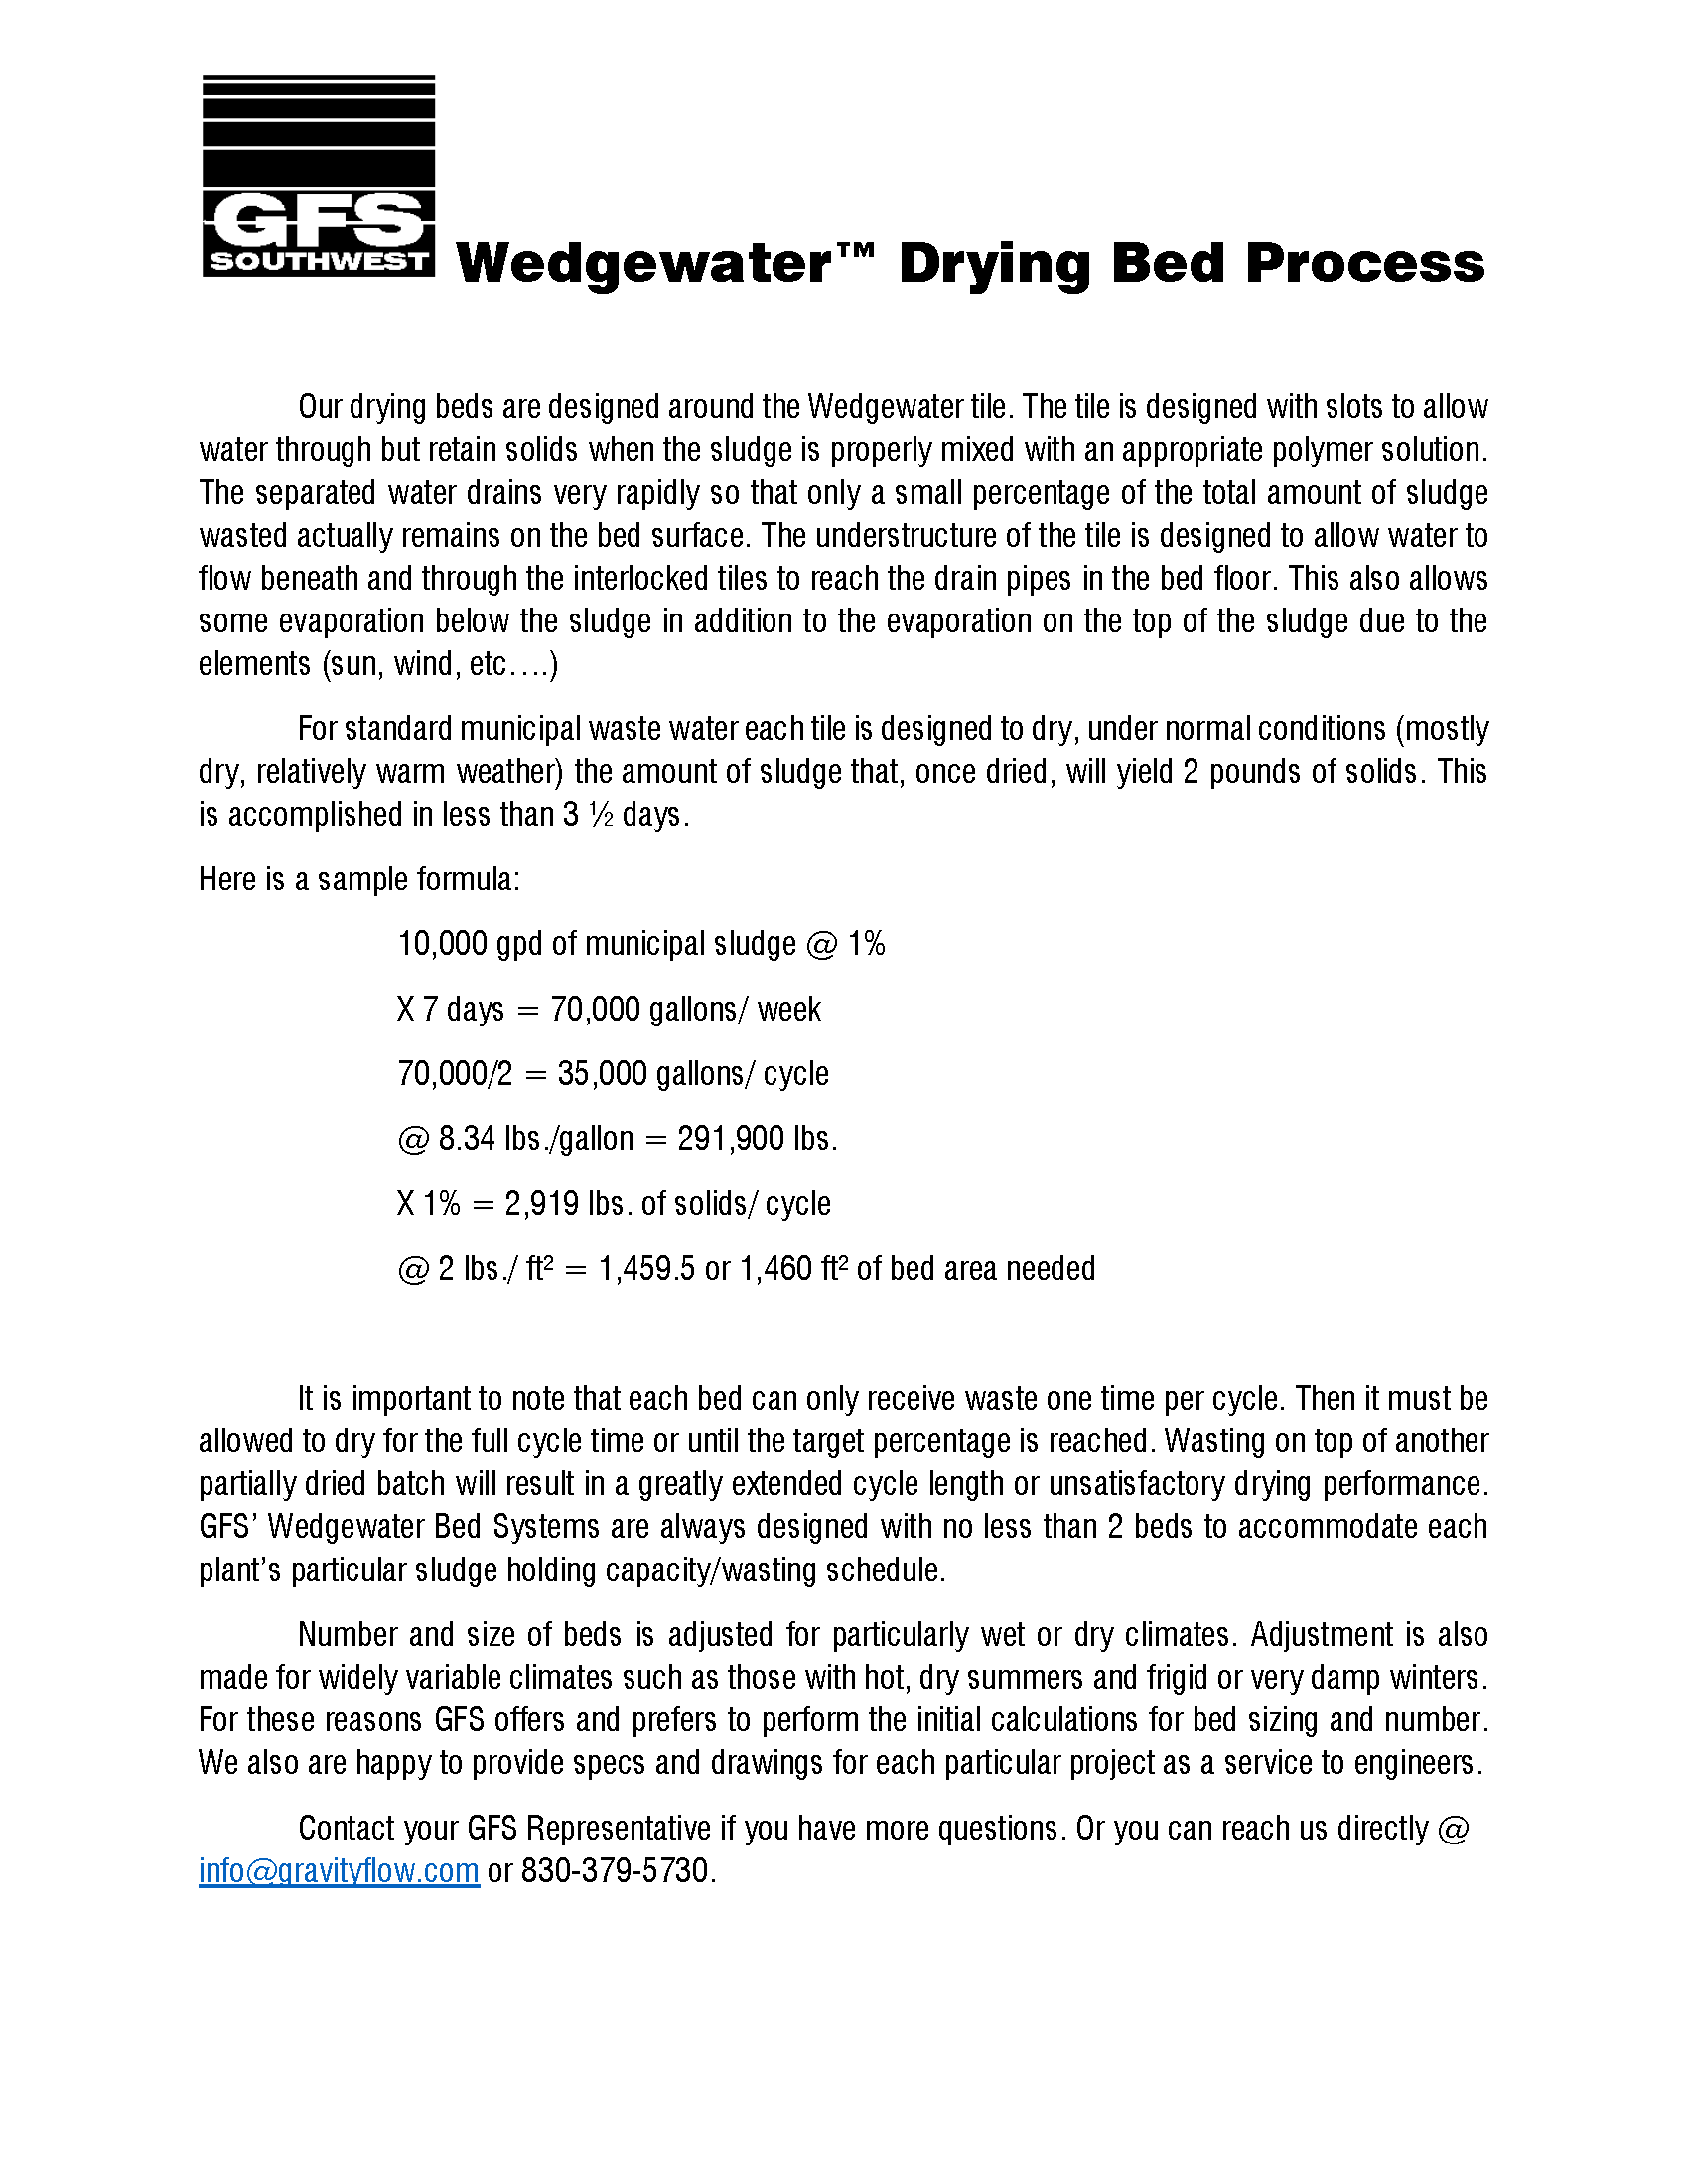 Wedgewater Drying Bed Brochure